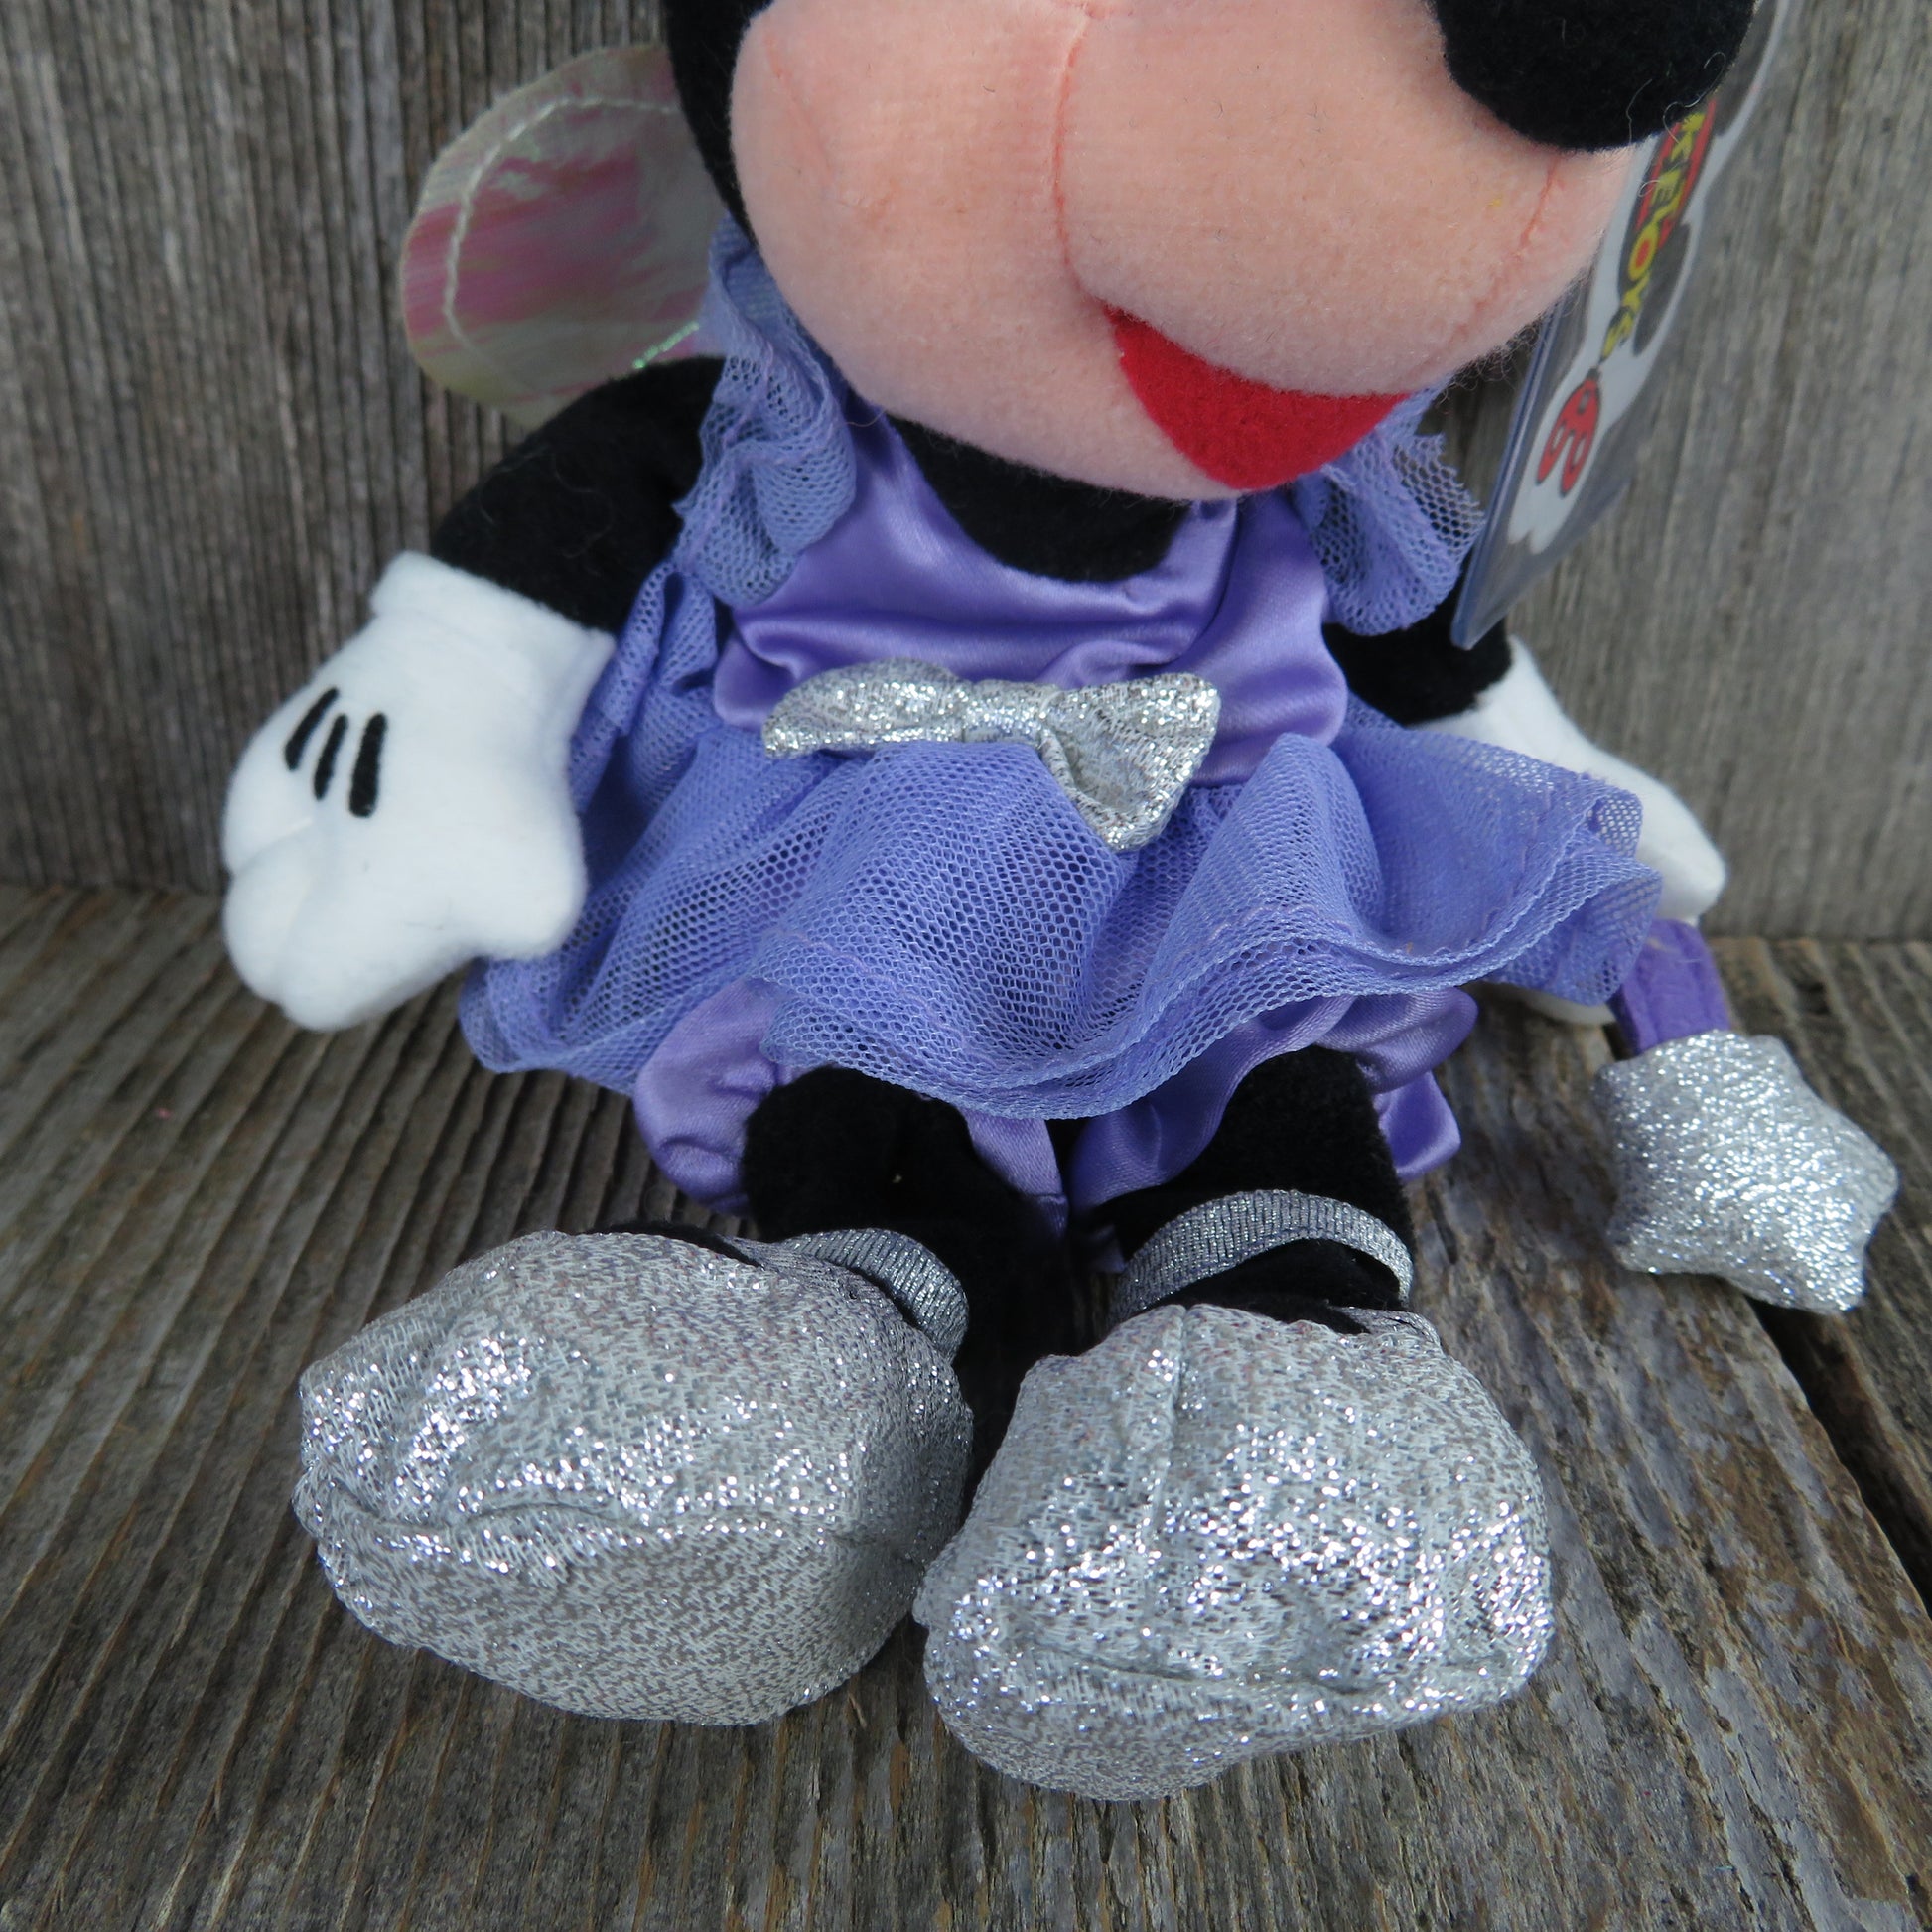 Minnie Mouse Sugar Plum Fairy Plush Beanie Disneyland Mouseketoys Bean Bag Stuffed Animal - At Grandma's Table